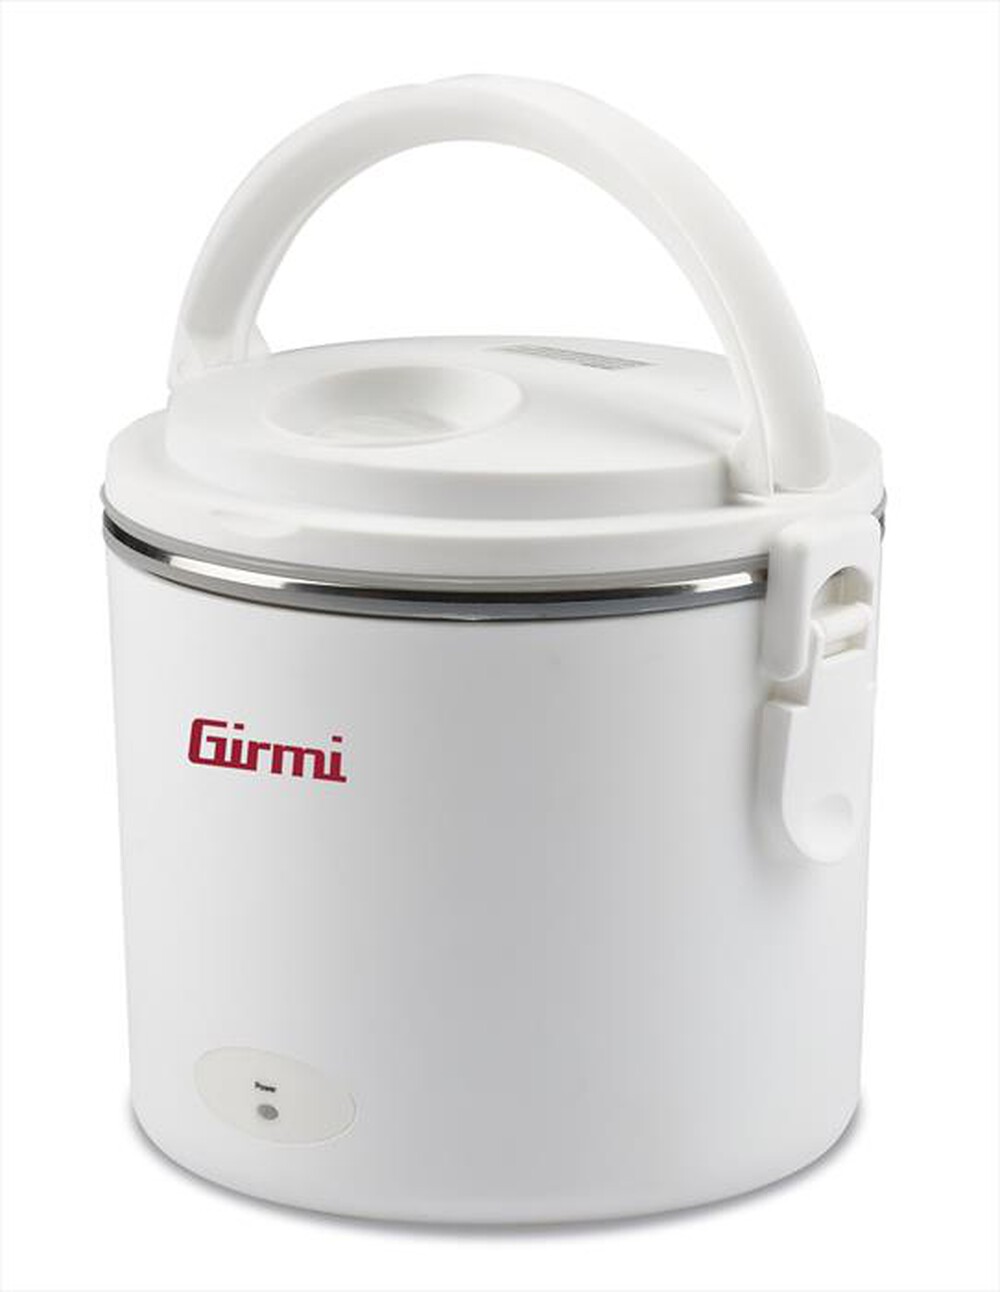 "GIRMI - SC0101-Bianco"